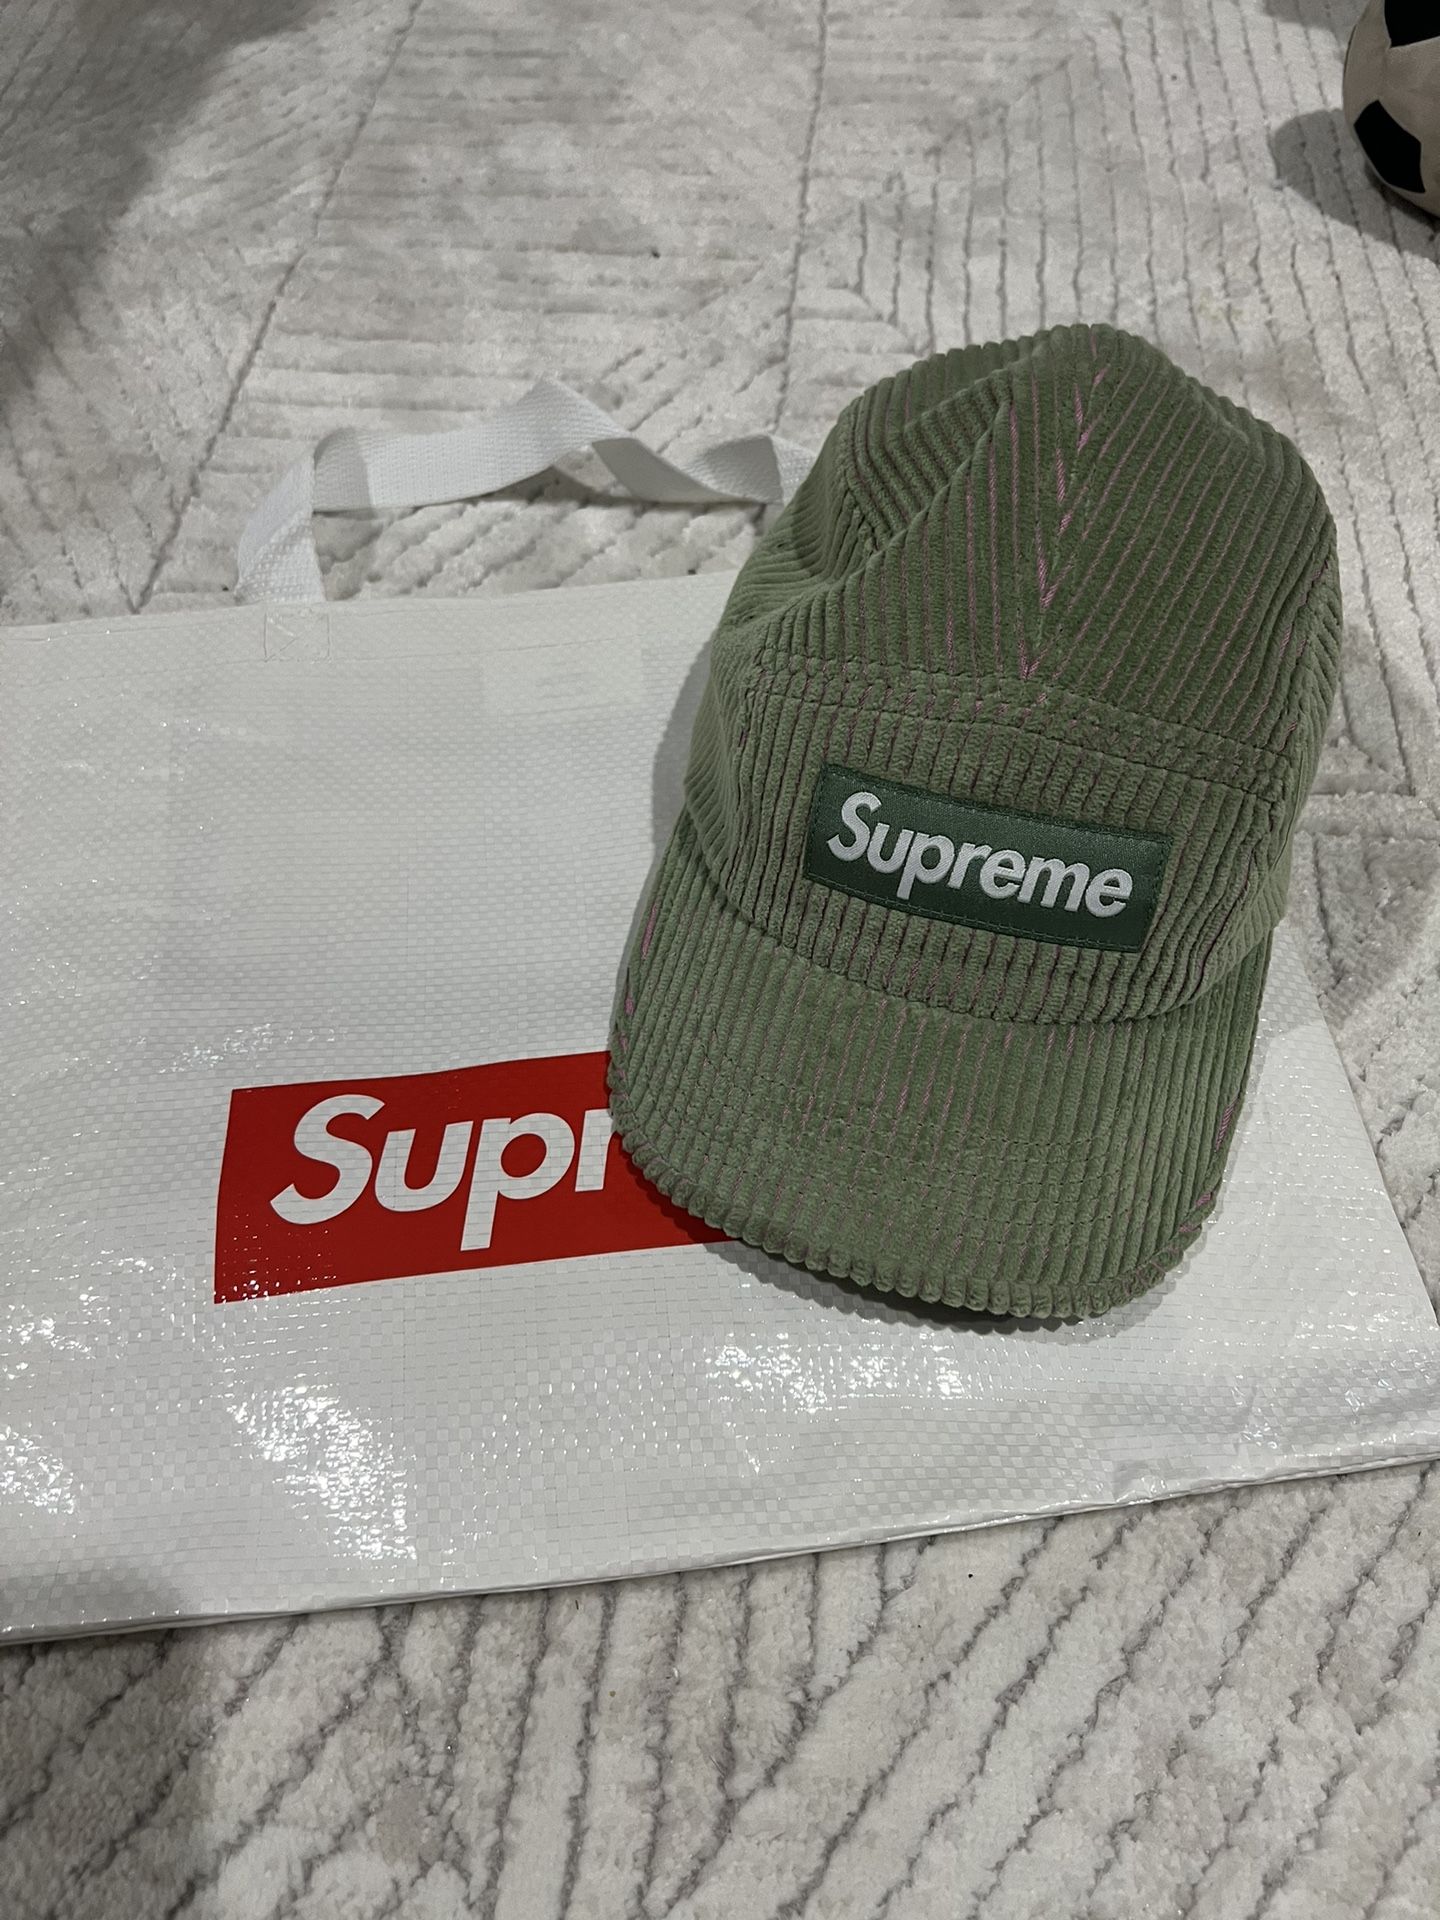 I sell supreme cap 